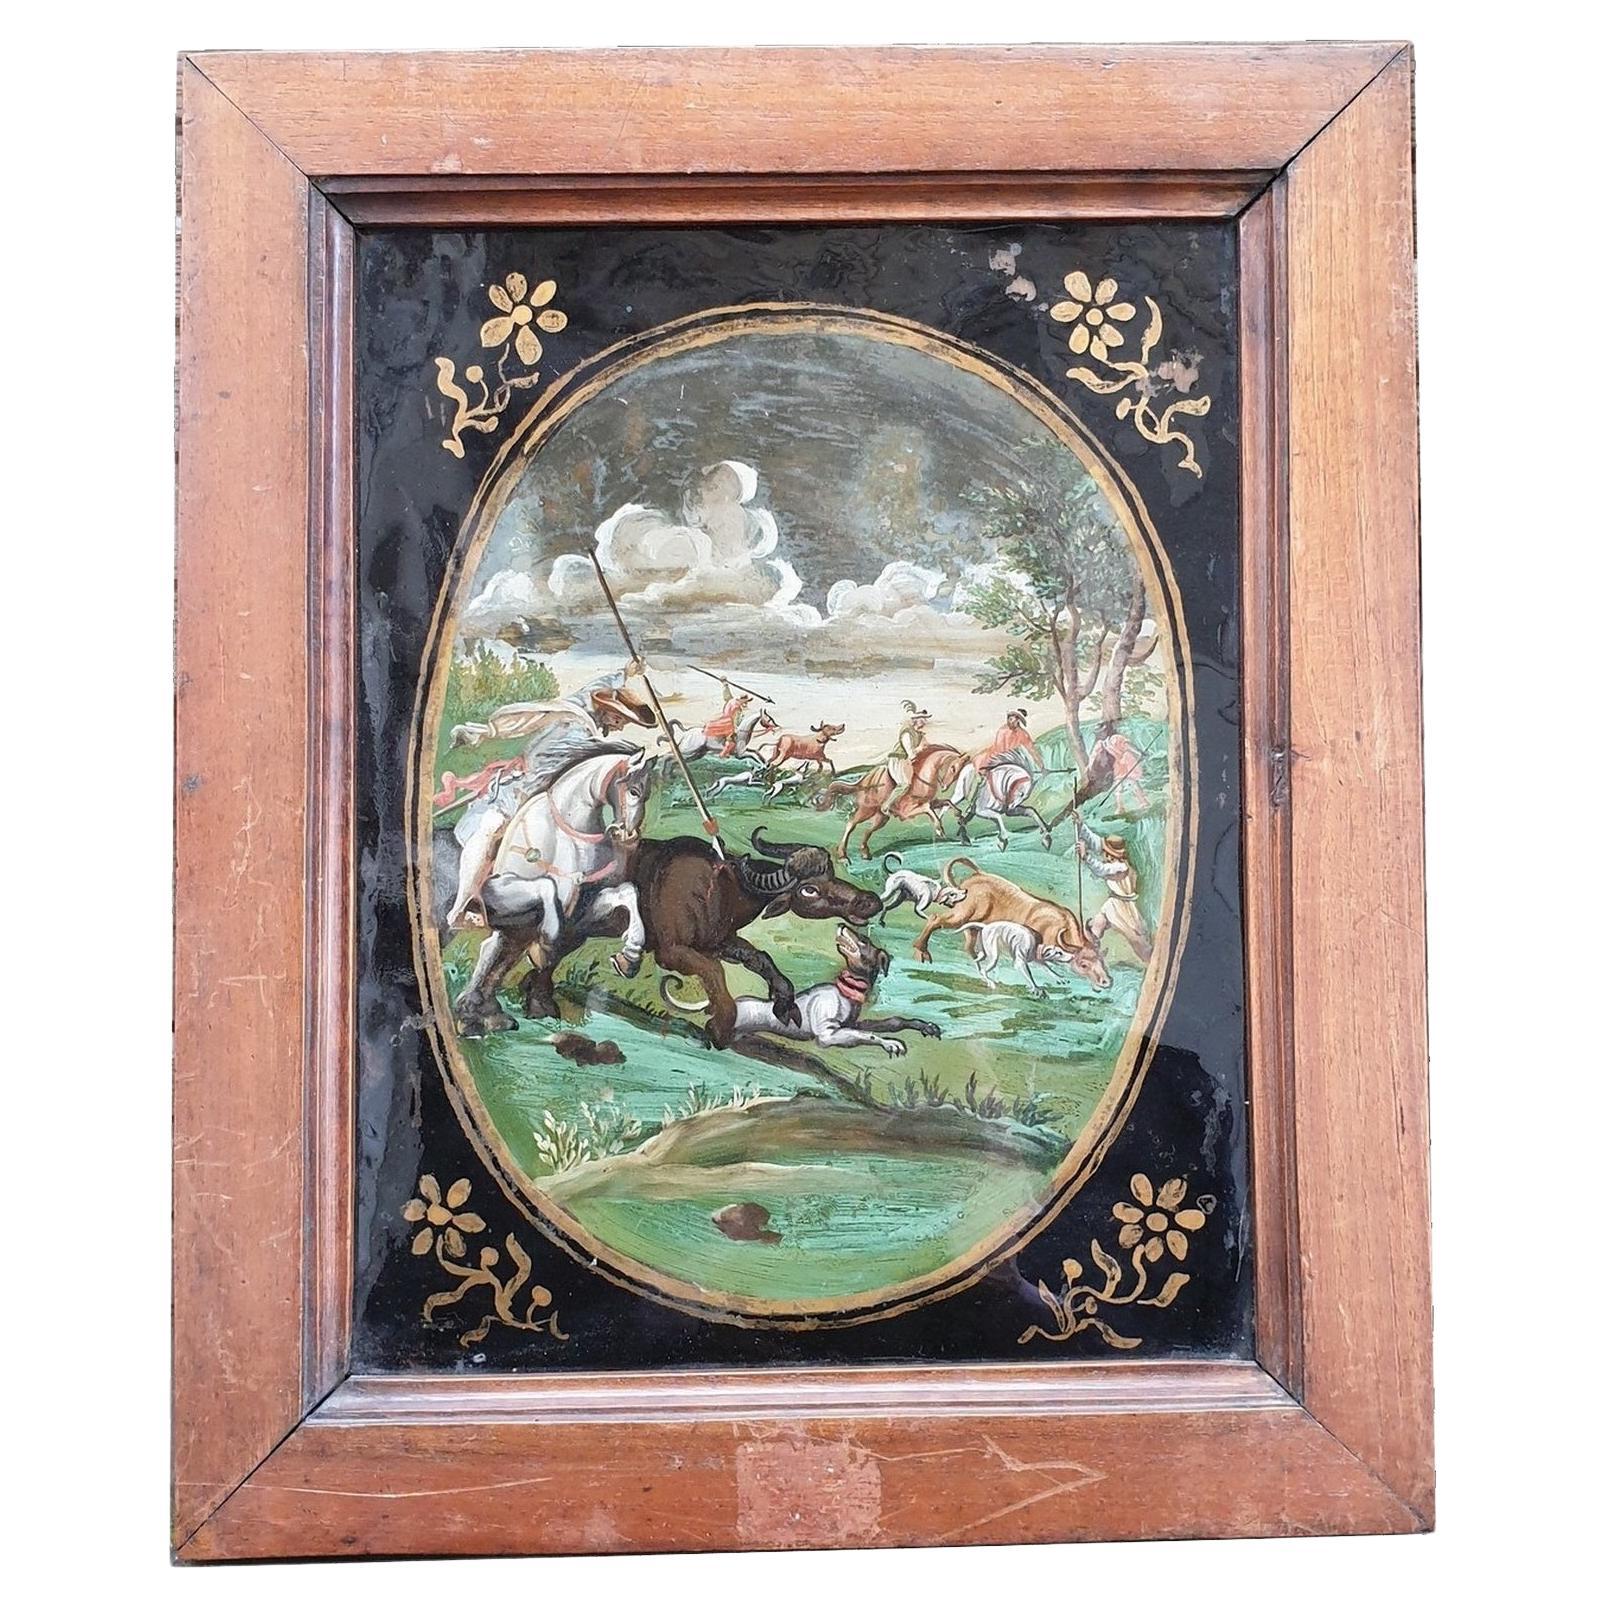 Buffalo hunting, fixed under glass, Indo-Portuguese? 18th century